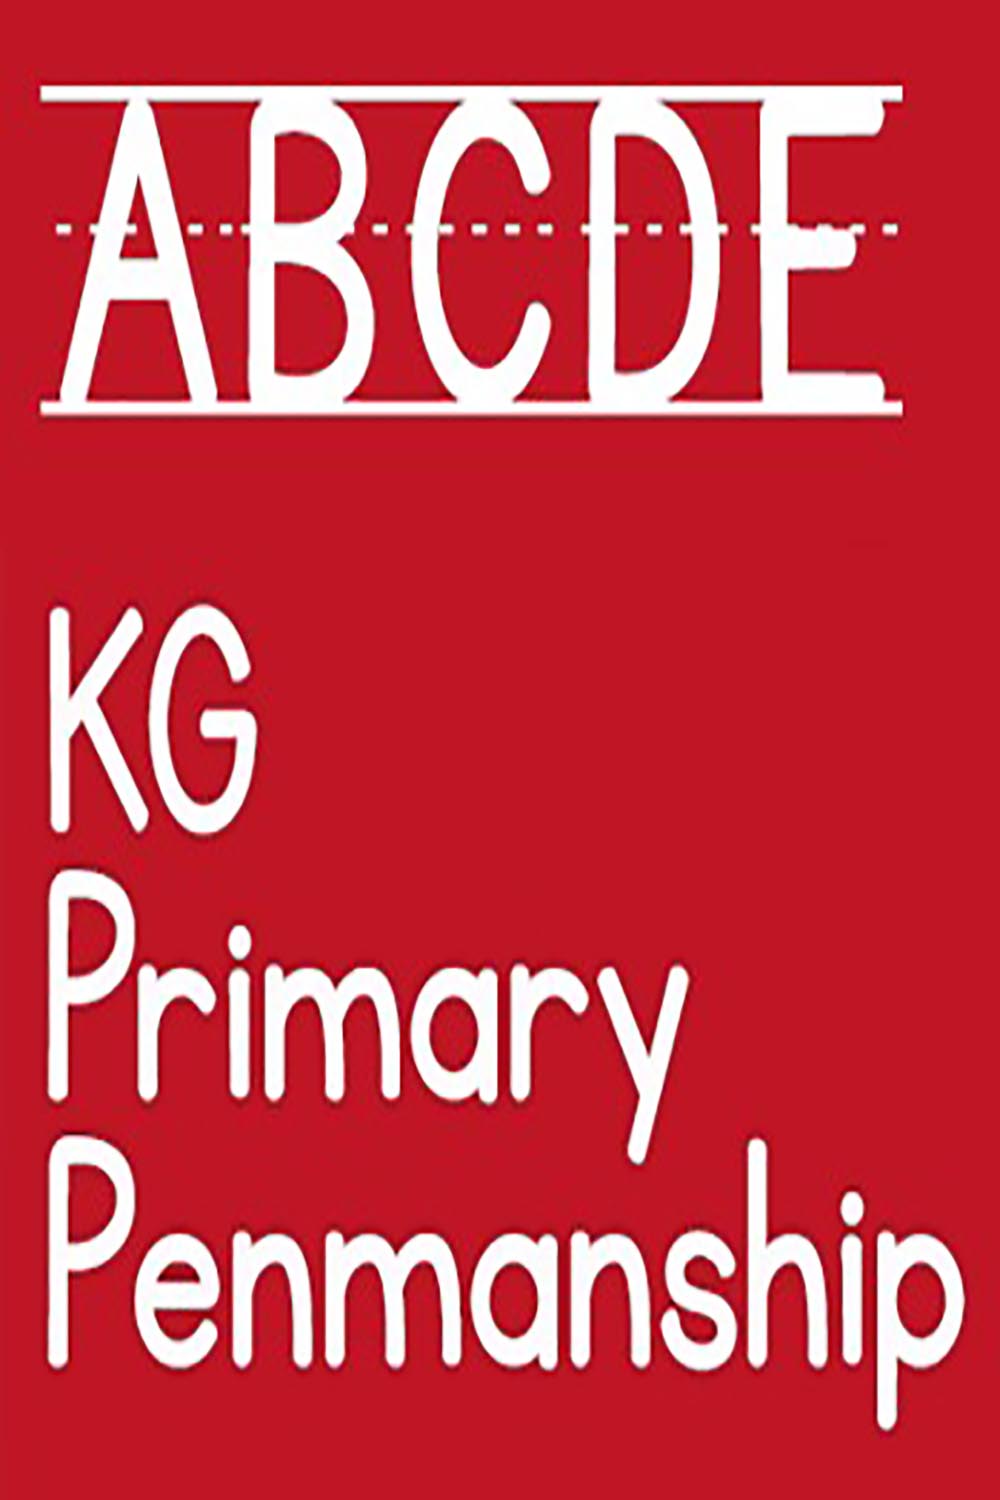 KG Primary Penmanship Lined Font pinterest preview image.